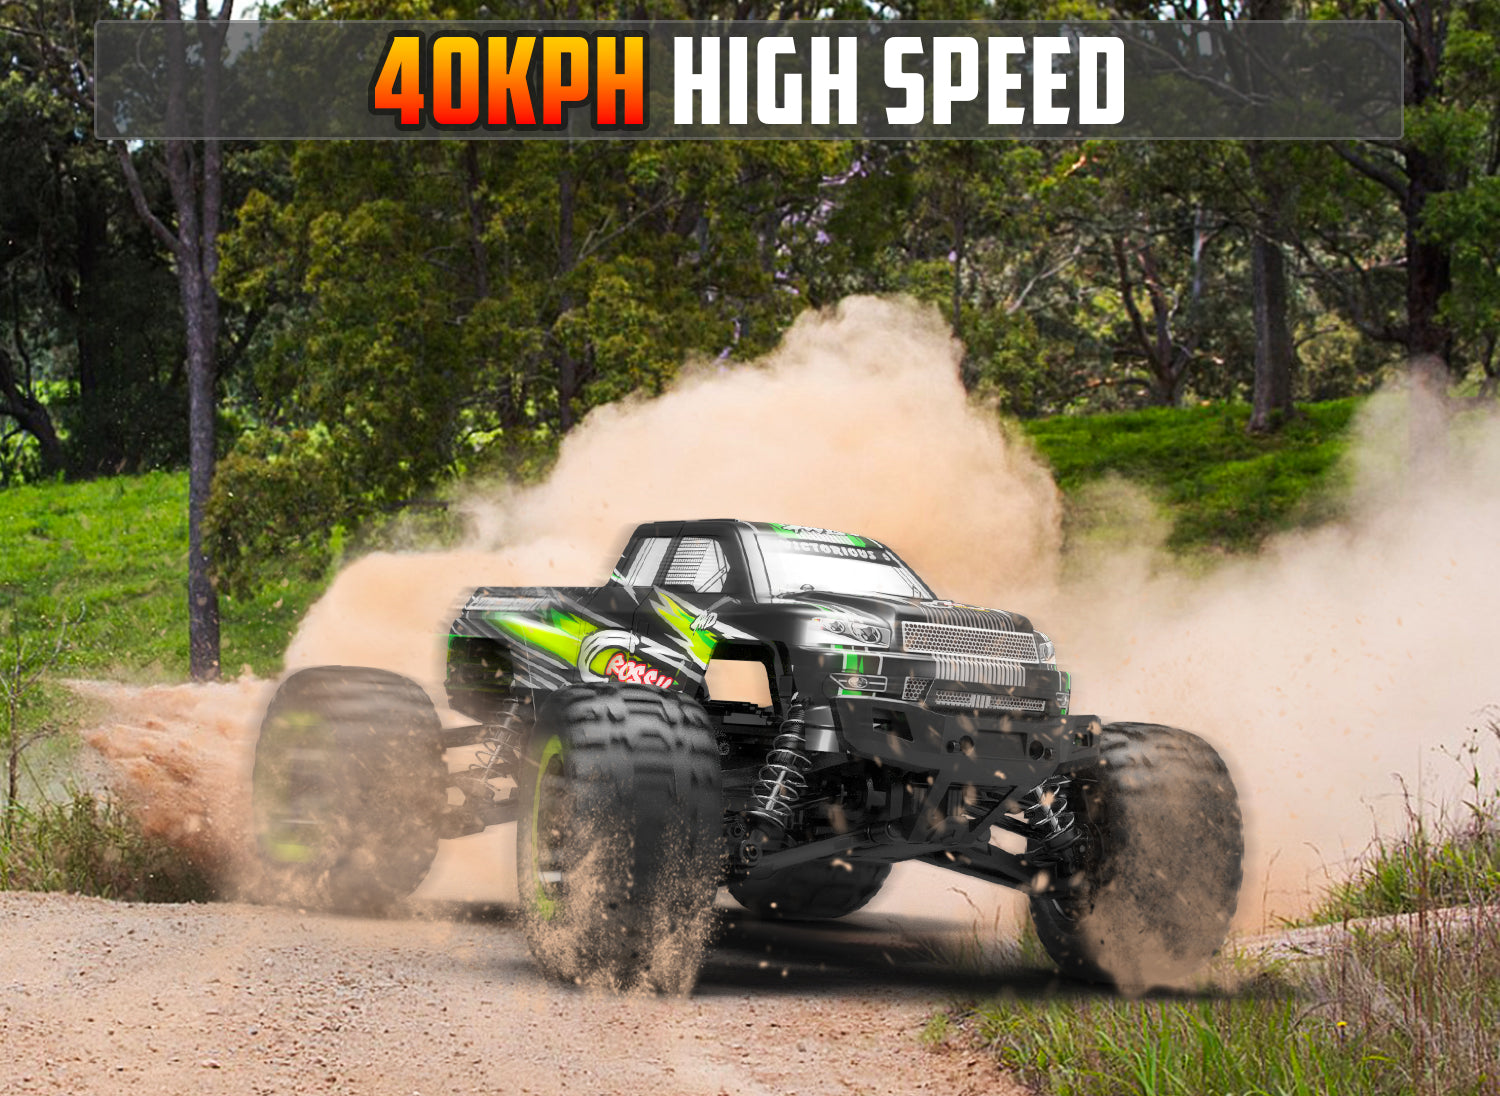 Racent - Coche de control remoto 4WD todoterreno RC Monster Truck escala 1:16 30 MPH de alta velocidad todo terreno RC vehículo para niños o adultos (785-5) (verde)